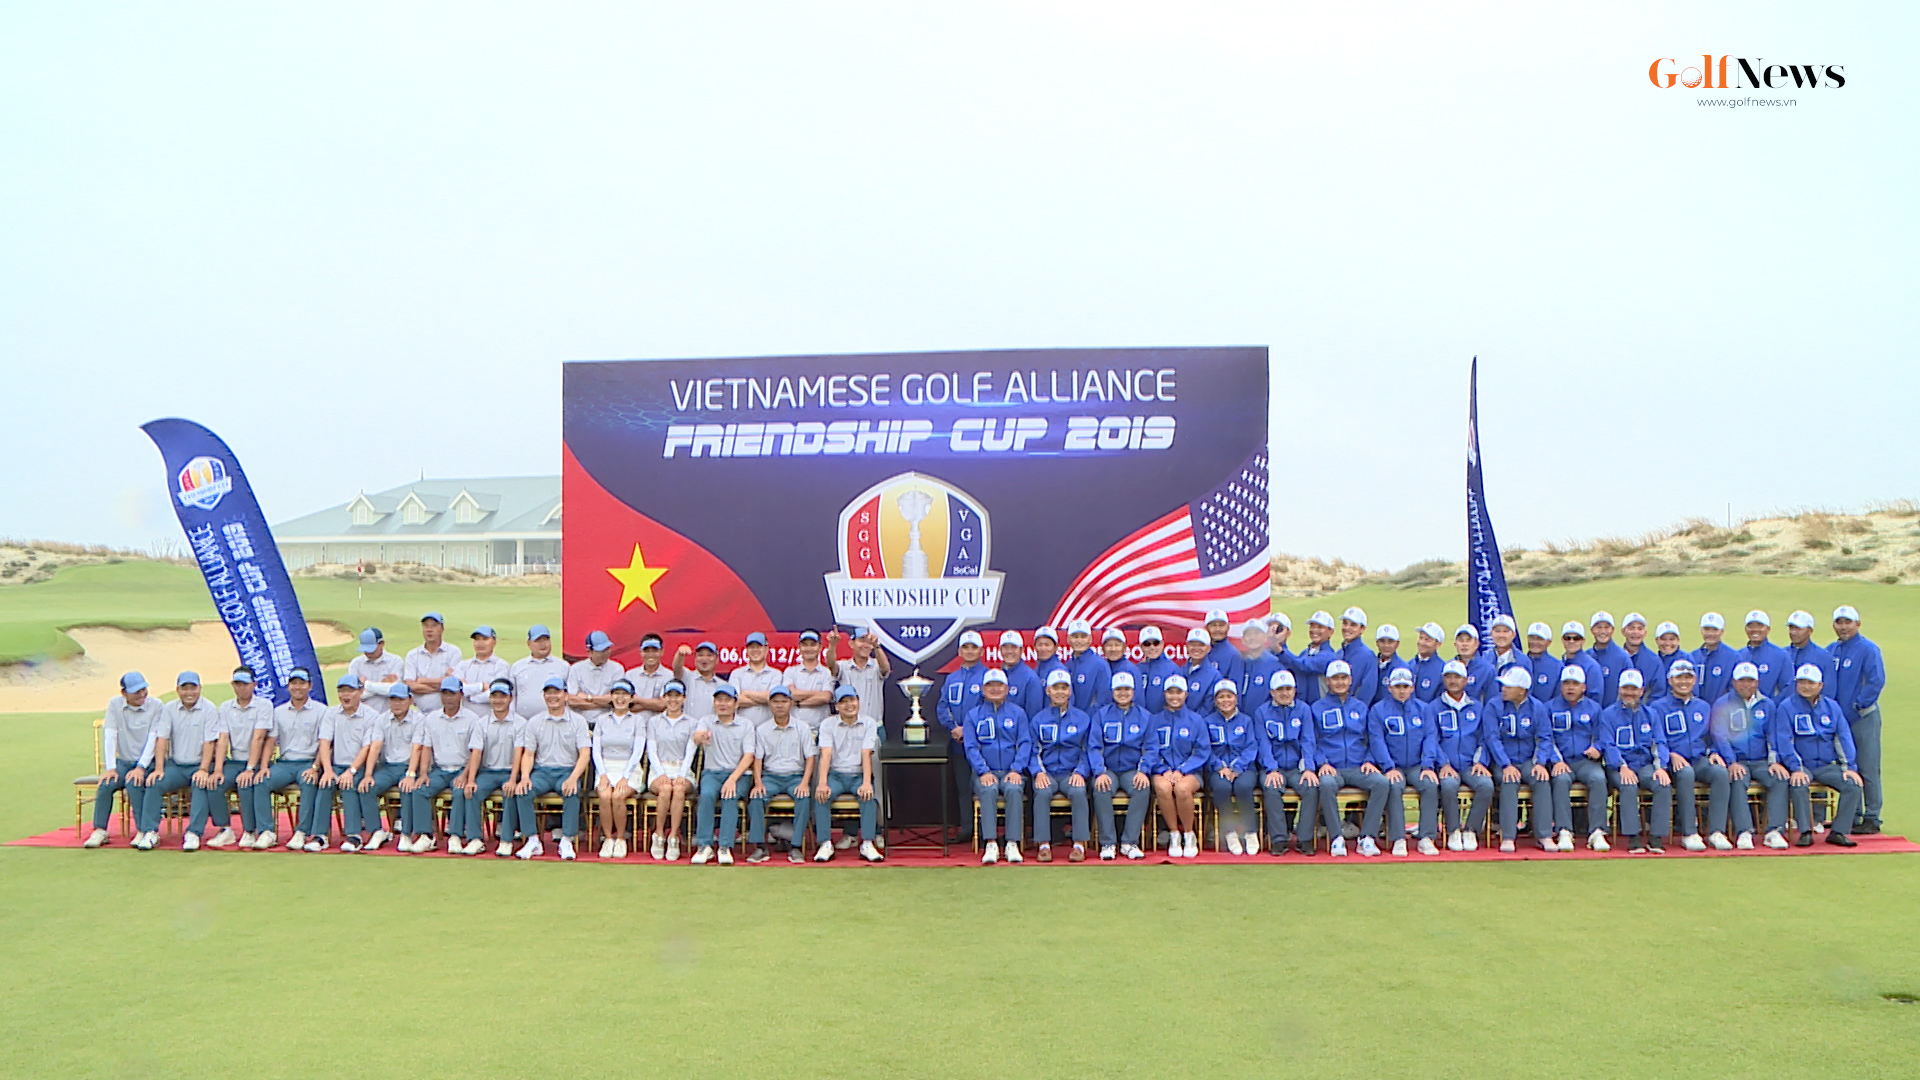 Chính thức khai mạc giải Golf Vietnamese Golf Alliance Friendship Cup 2019